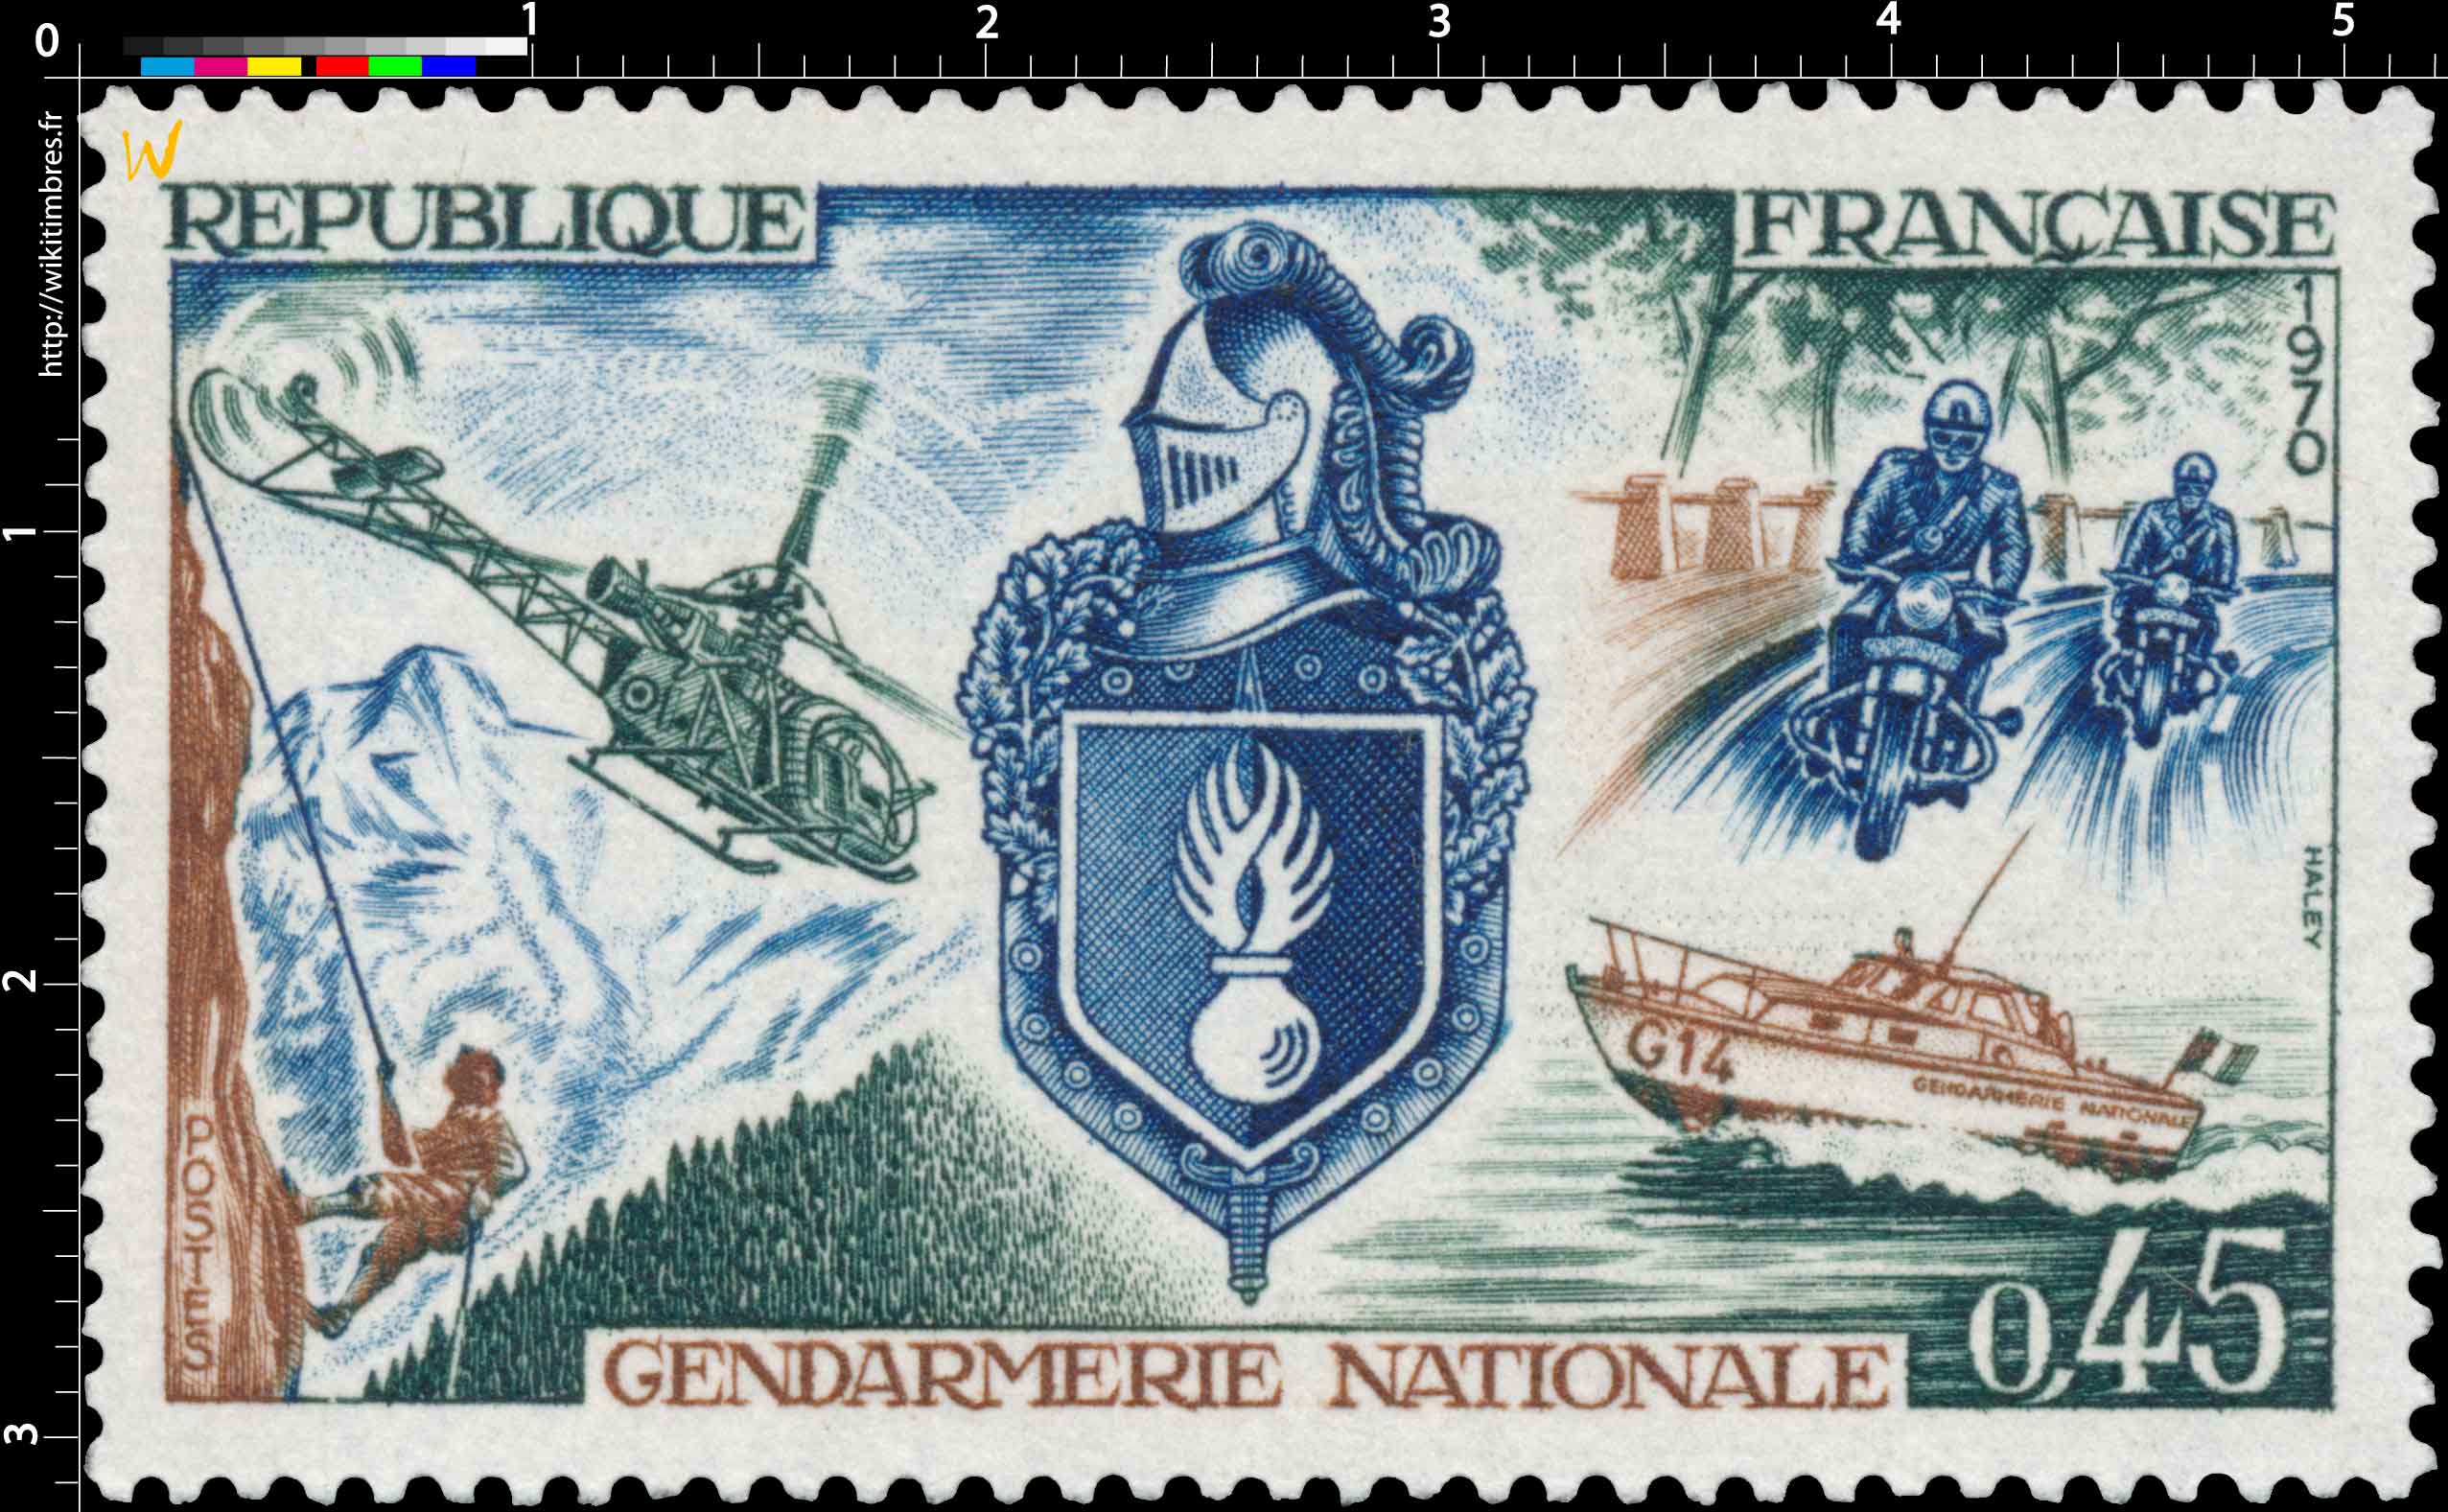 1970 GENDARMERIE NATIONALE